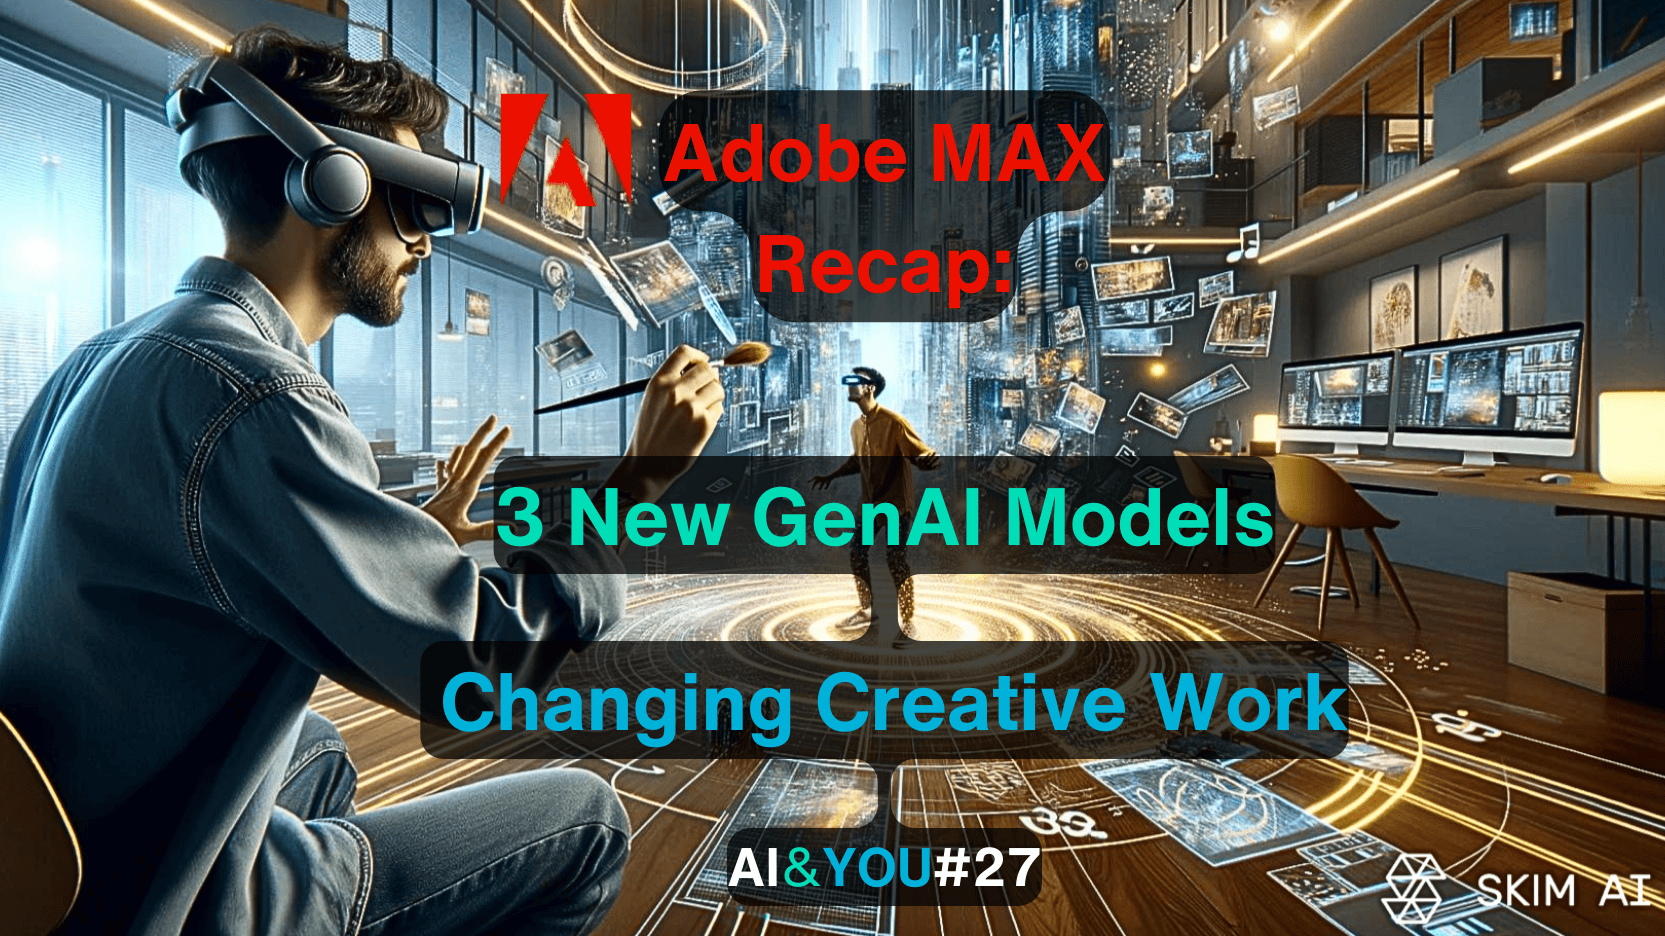 AI&YOU#27: Adobe Max introduce tres importantes modelos de IA generativa